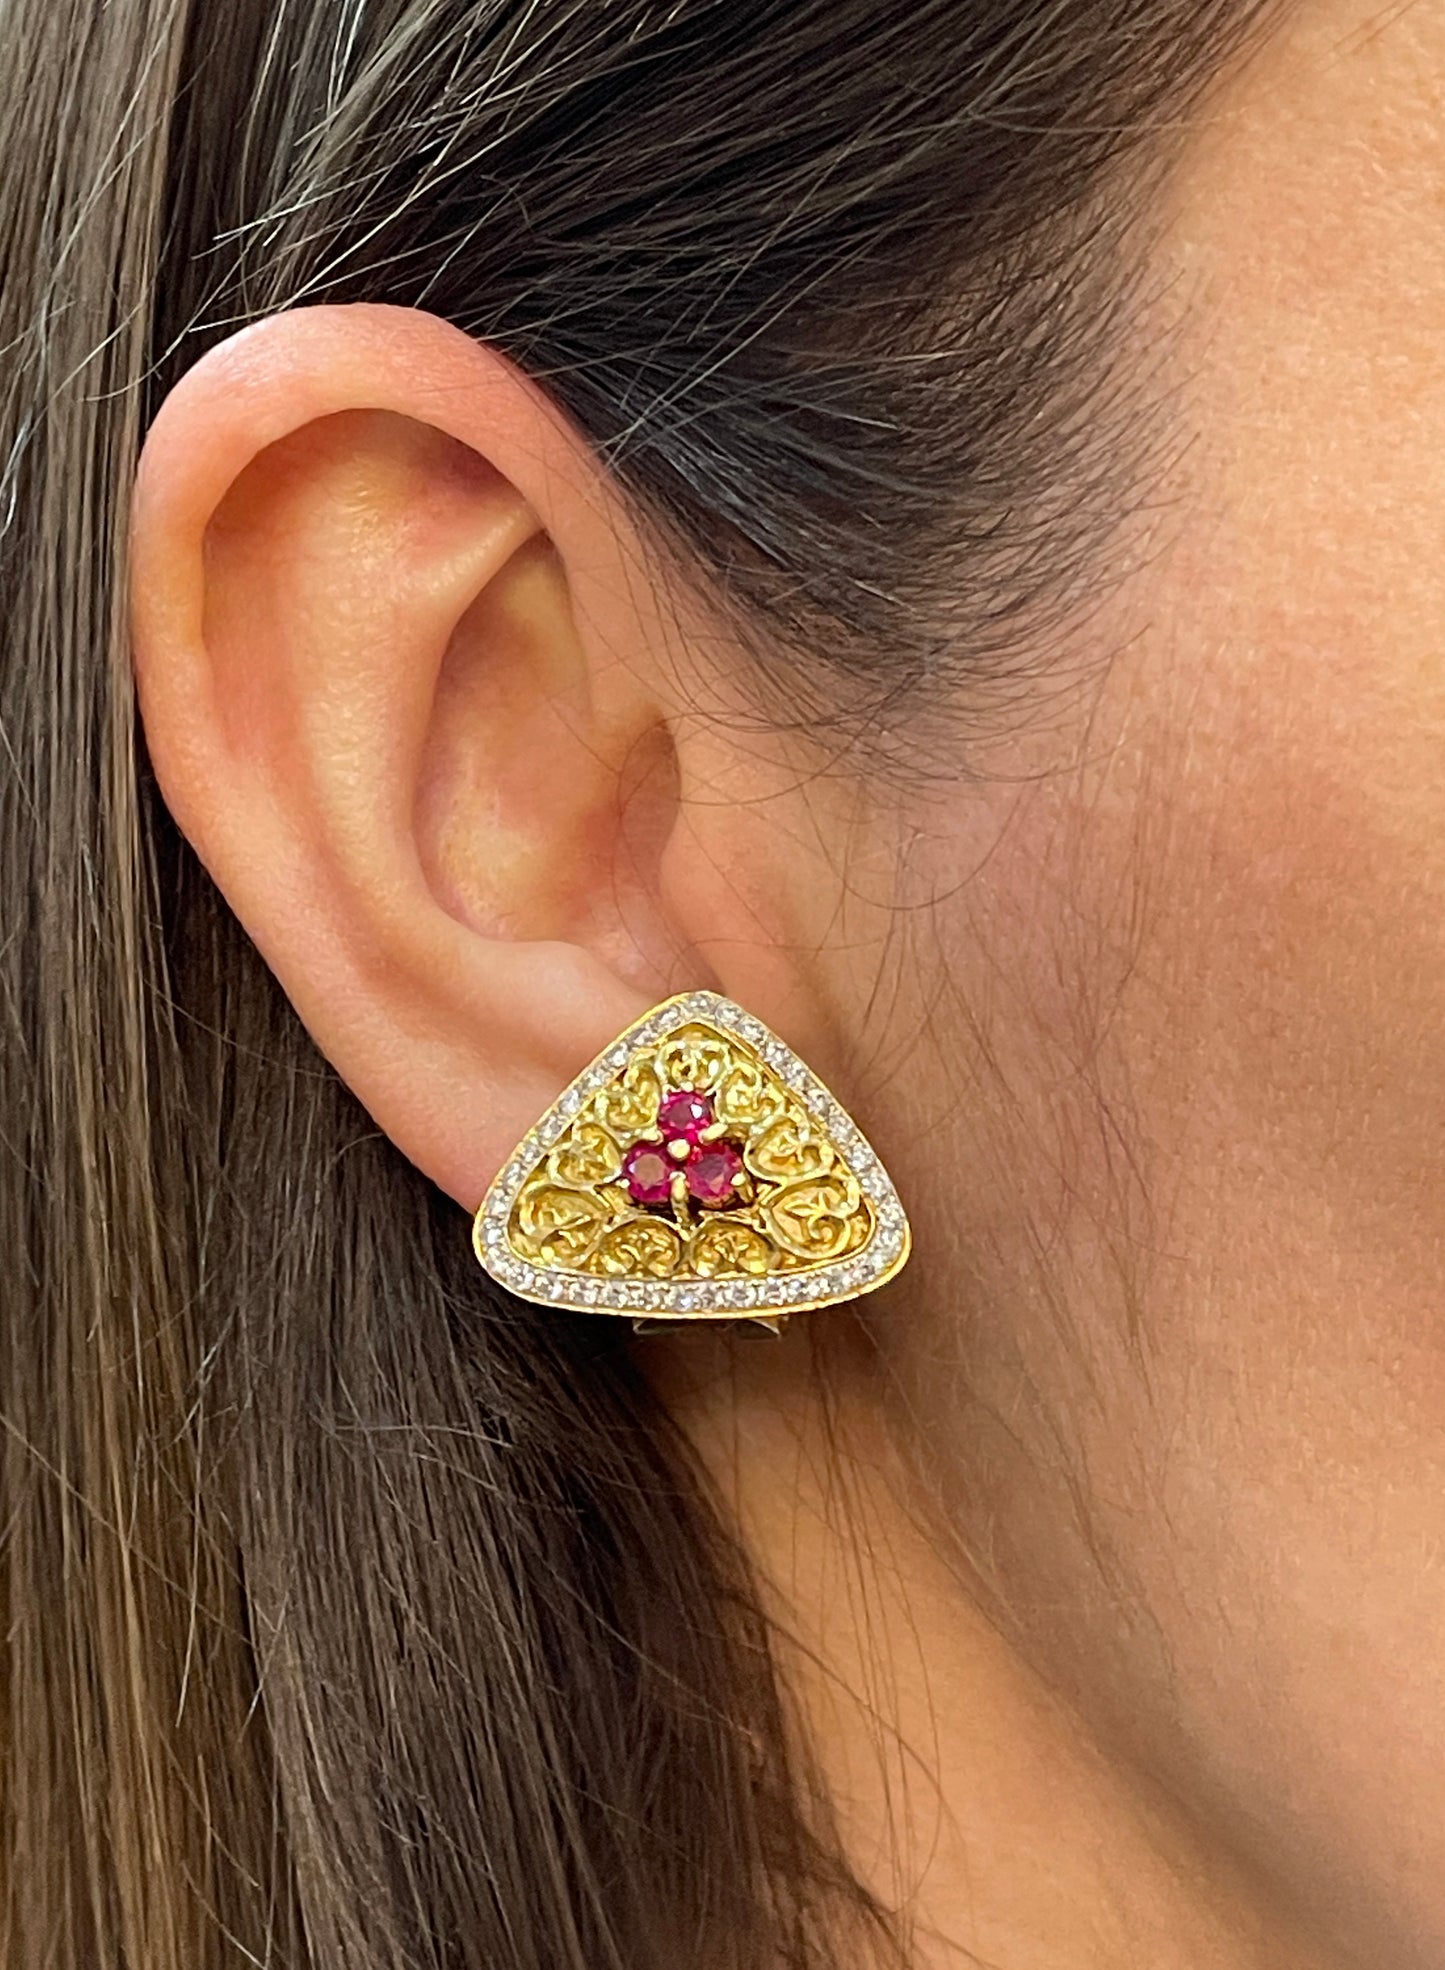 Ruby and Diamond 18 Carat Yellow Gold Triangular Earrings